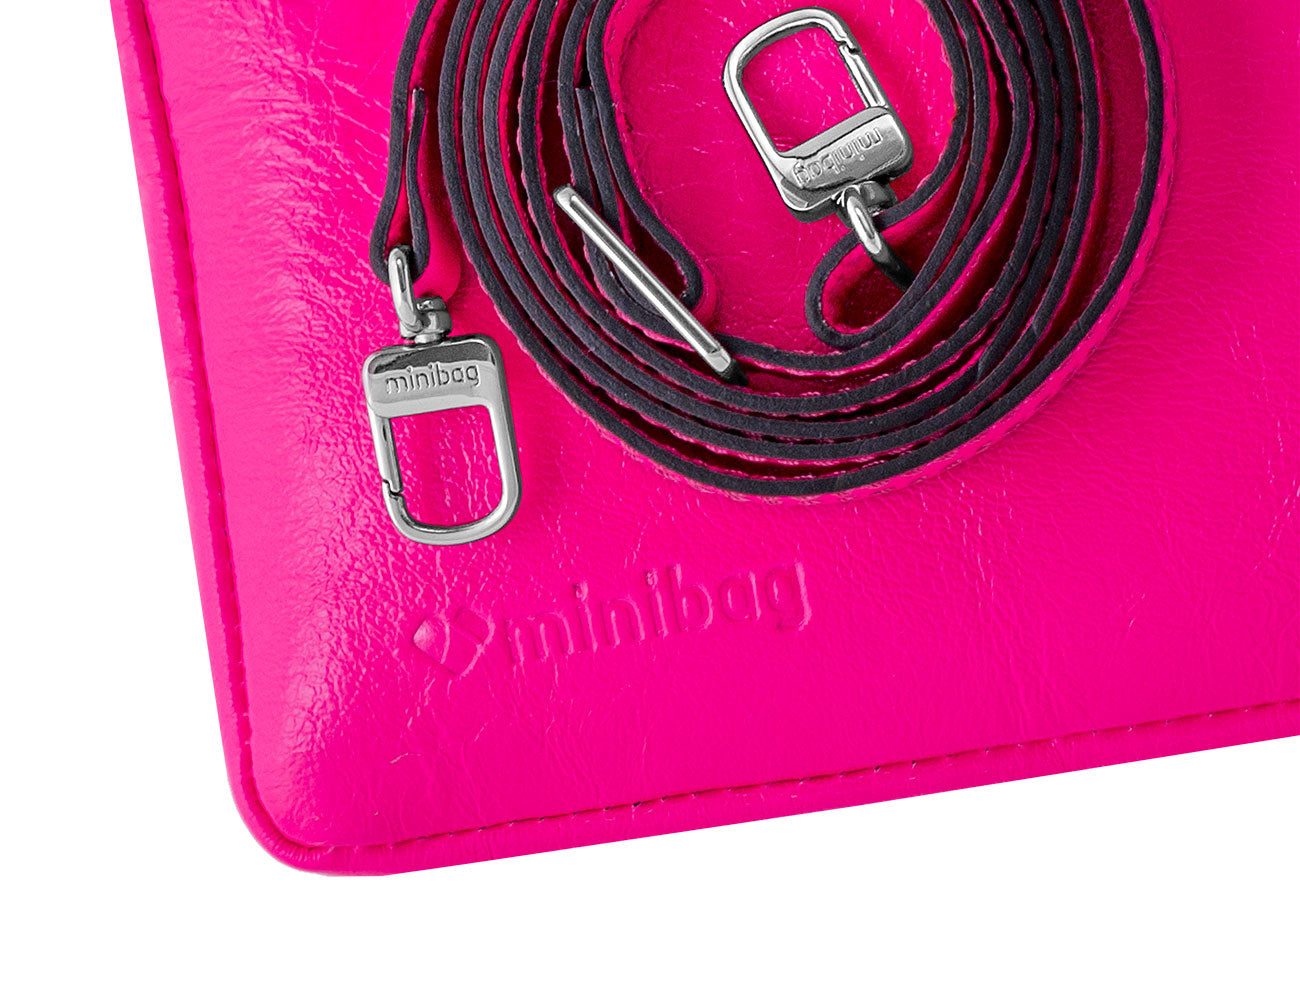 minibag neon pink, Ledertasche neon pink, Clutch neon pink, Detailaufnahme minibag, Ledergurt neon